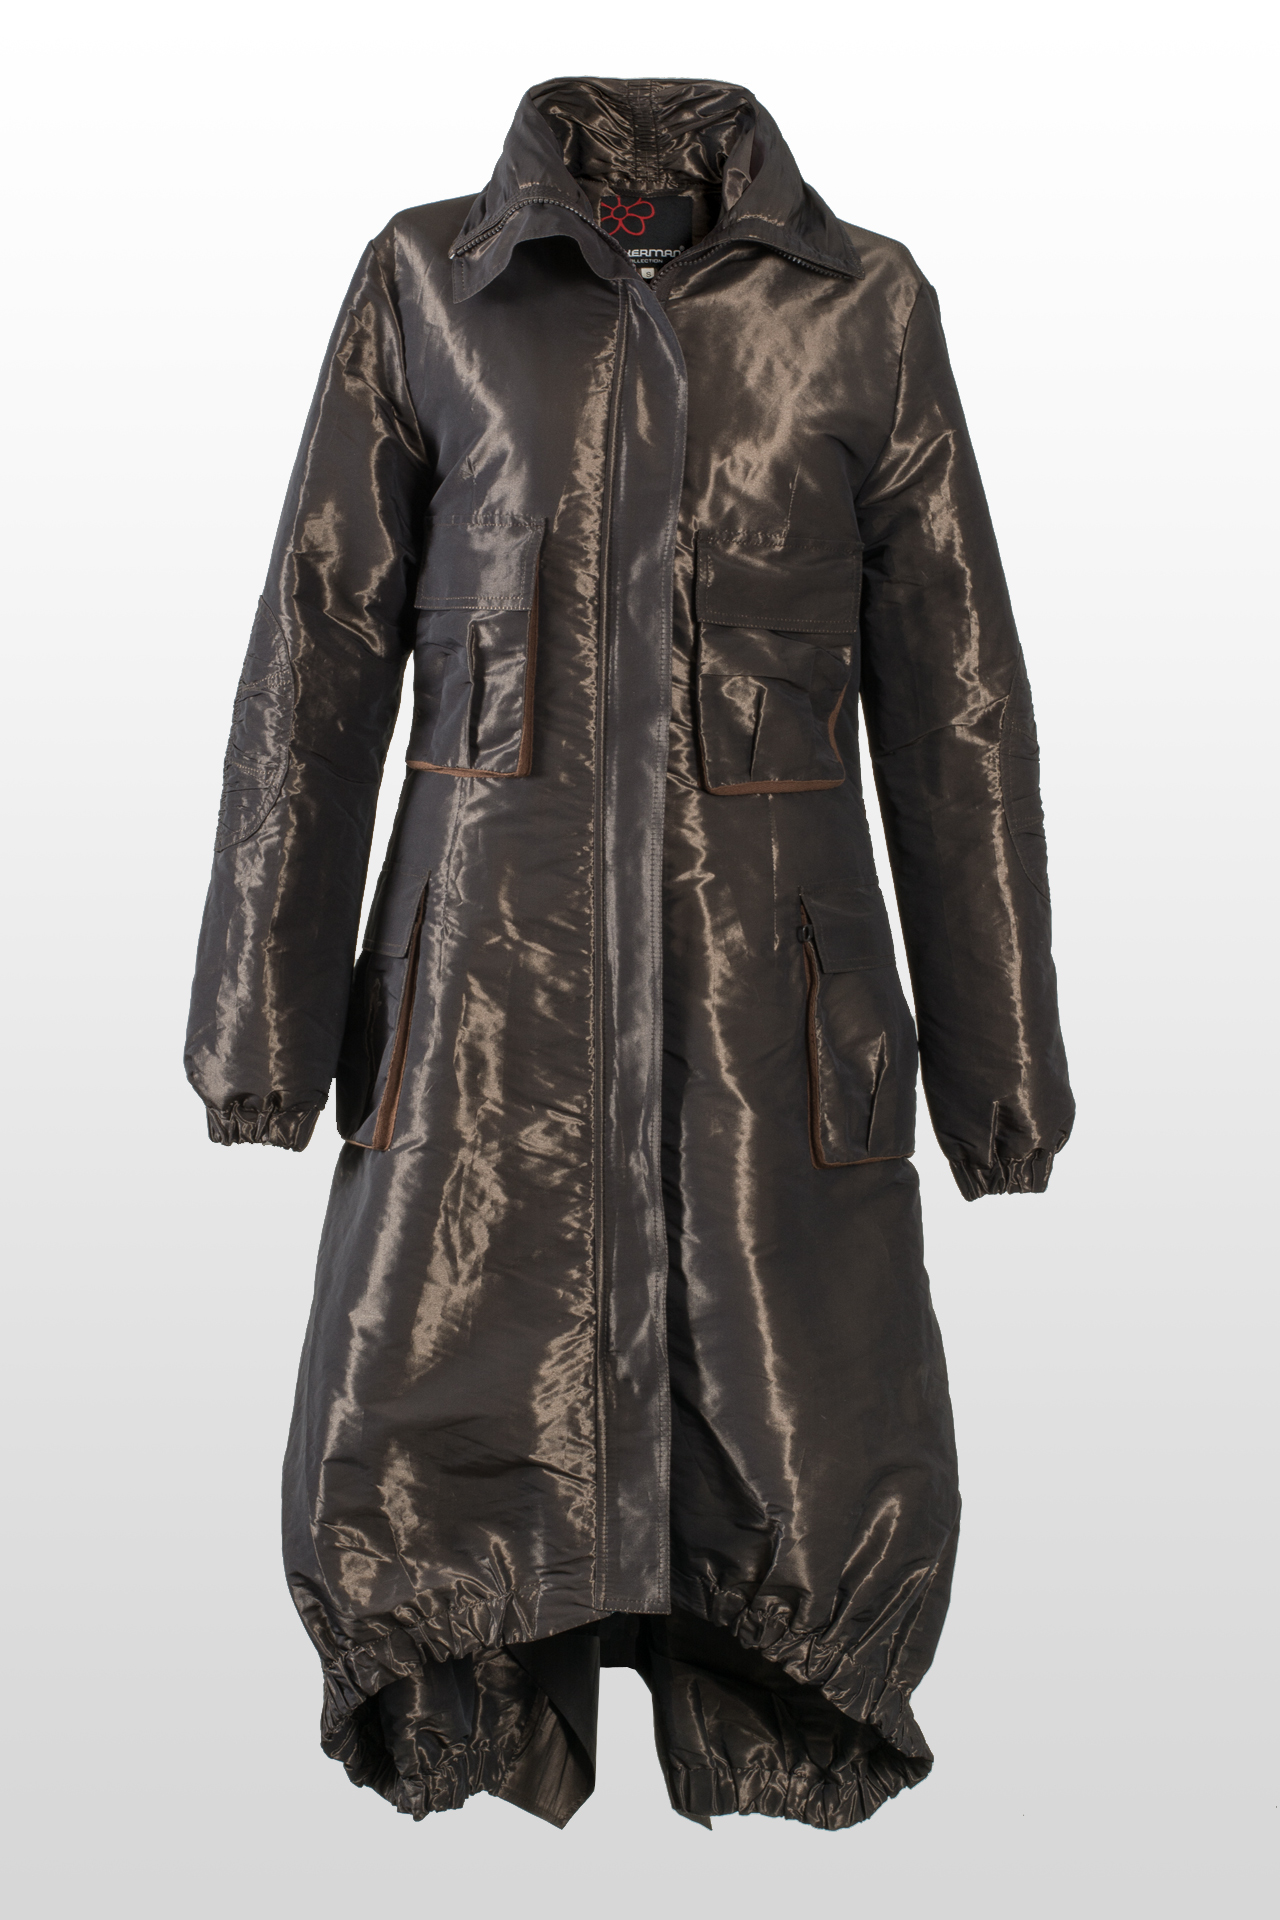 Пальто женское размер S - 3175